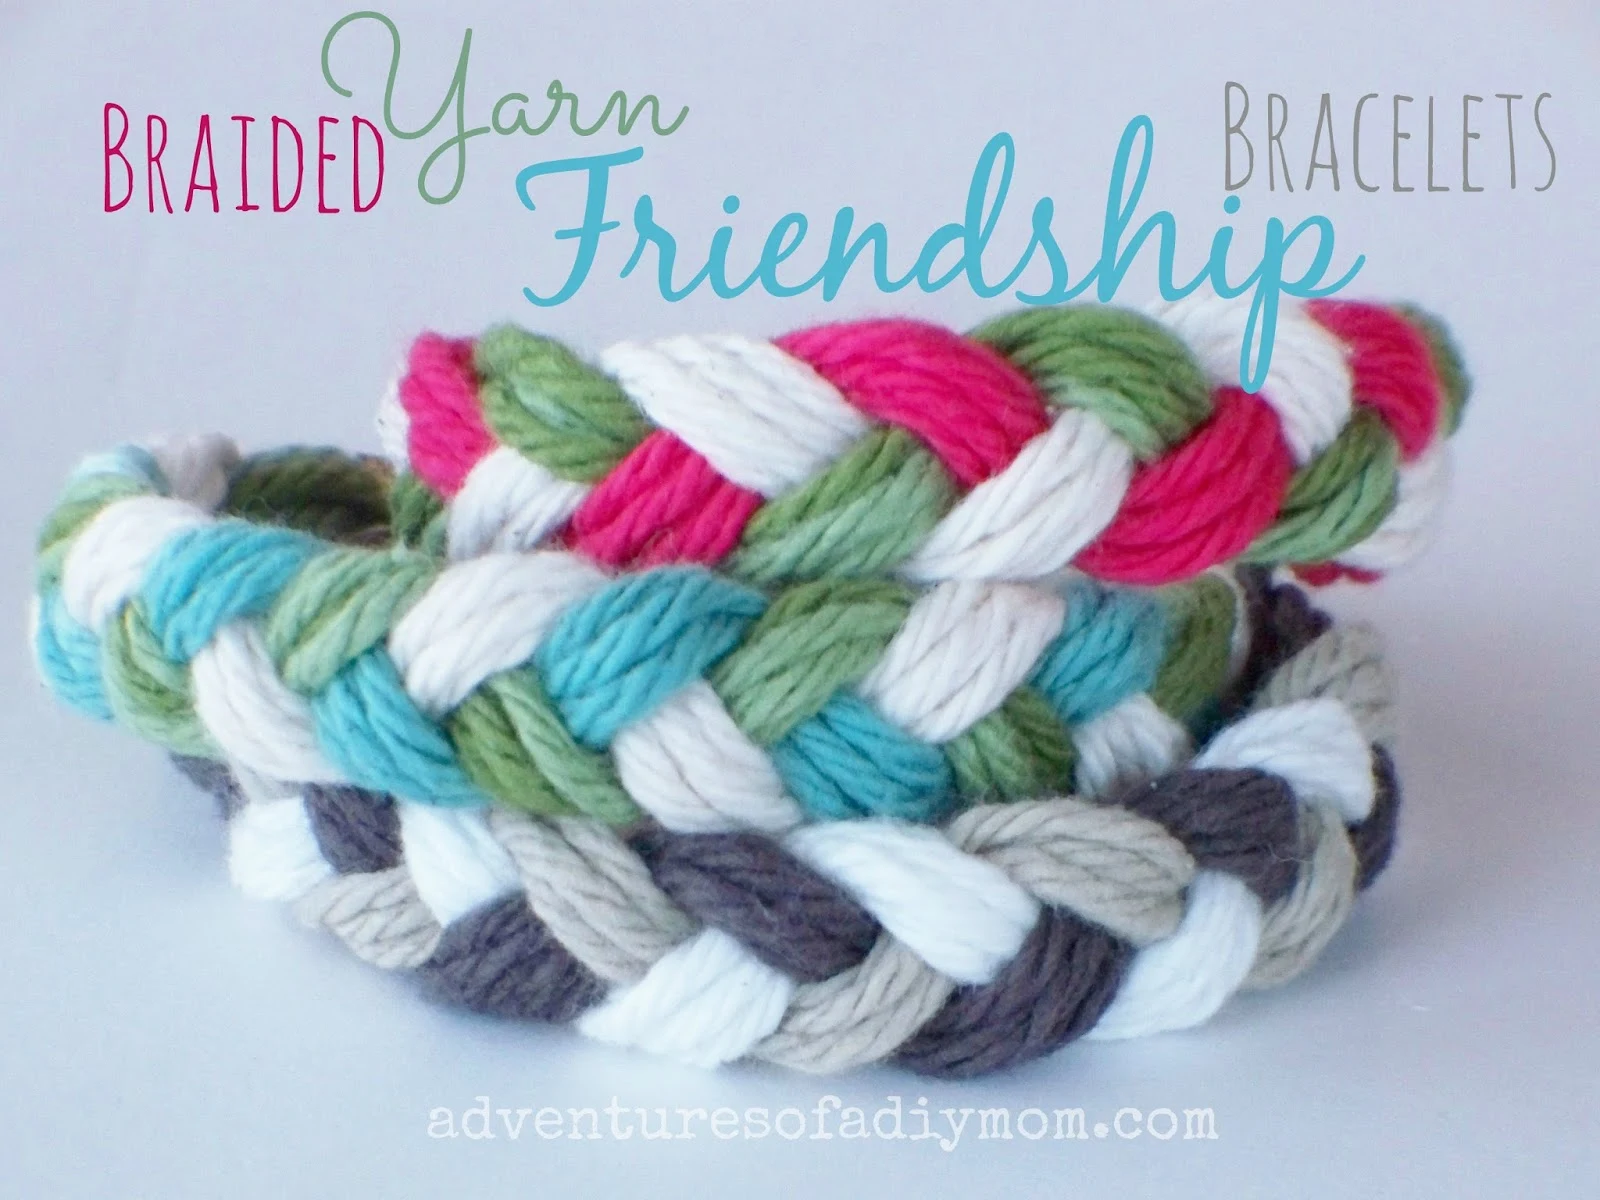 How to Make Bracelets with Yarn  Braided Friendship Bracelets